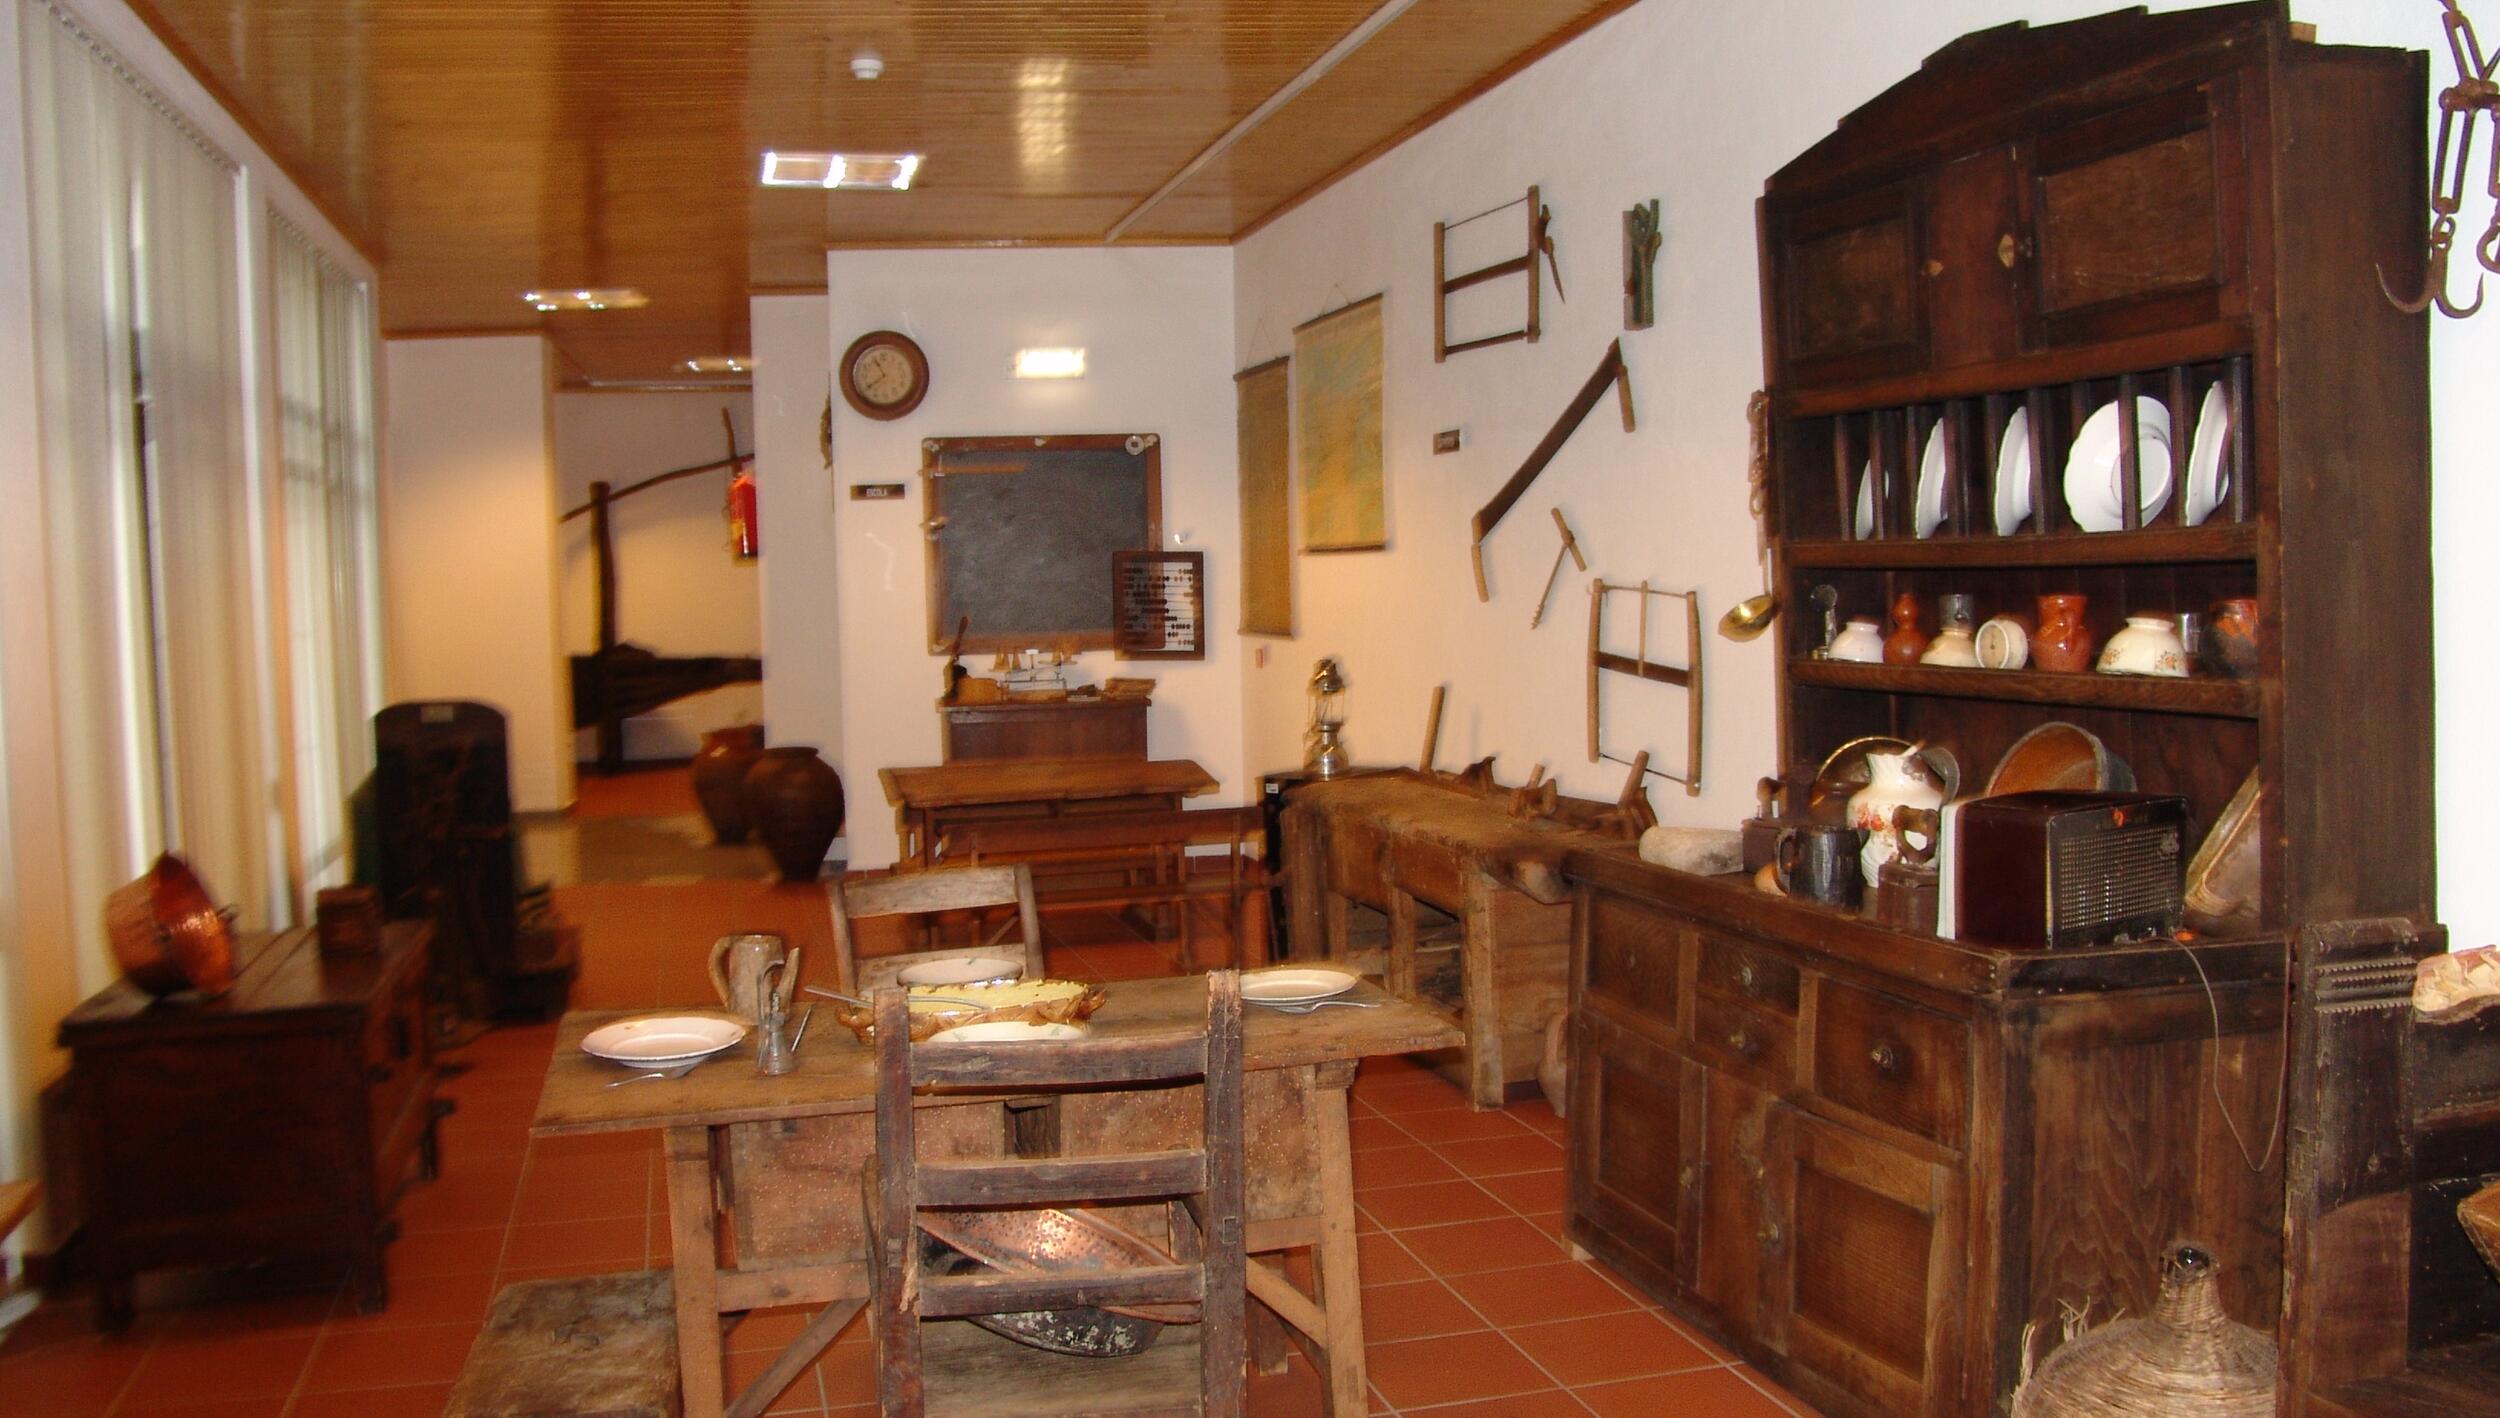 Núcleo Museológico Etnográfico da Casa da Cultura de Vimioso